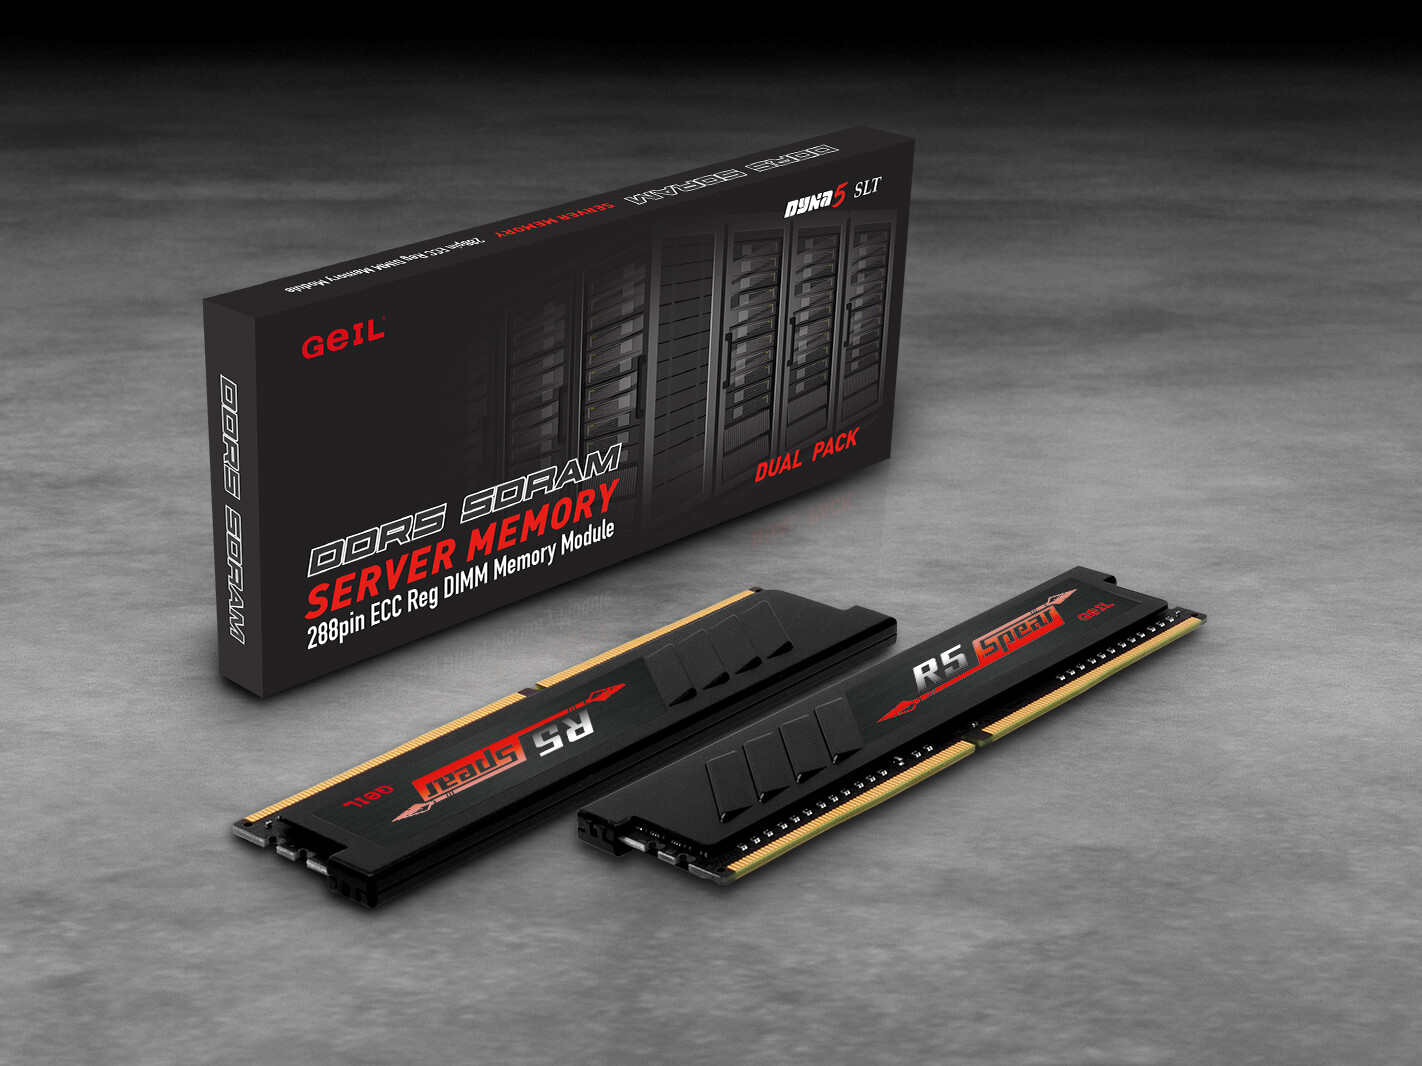 GeIL Ready With EVO V & Polaris AMD EXPO Edition DDR5 Memory